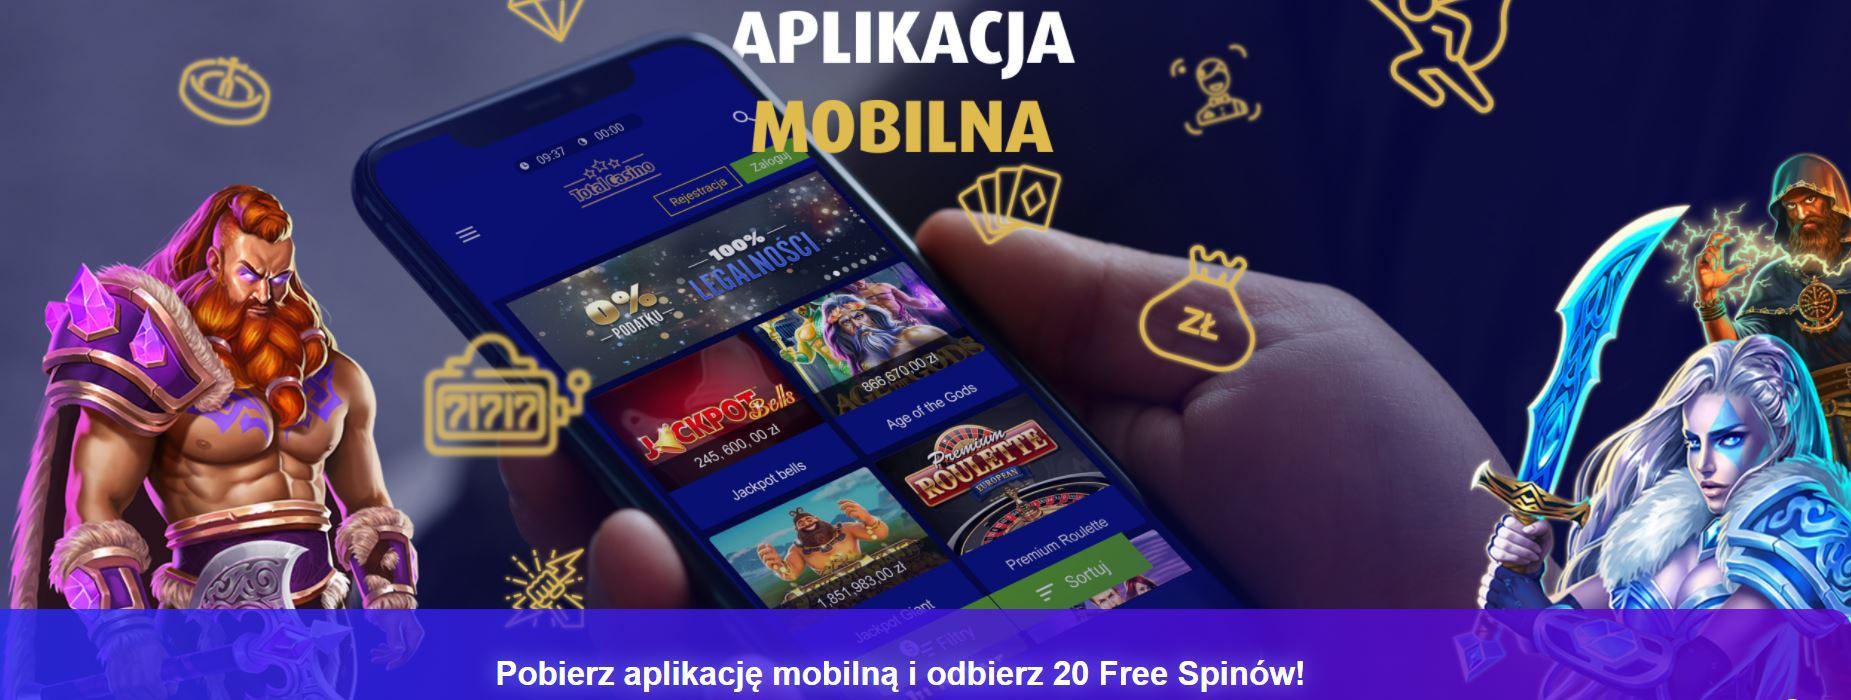 total casino aplikacja mobilna screenshot